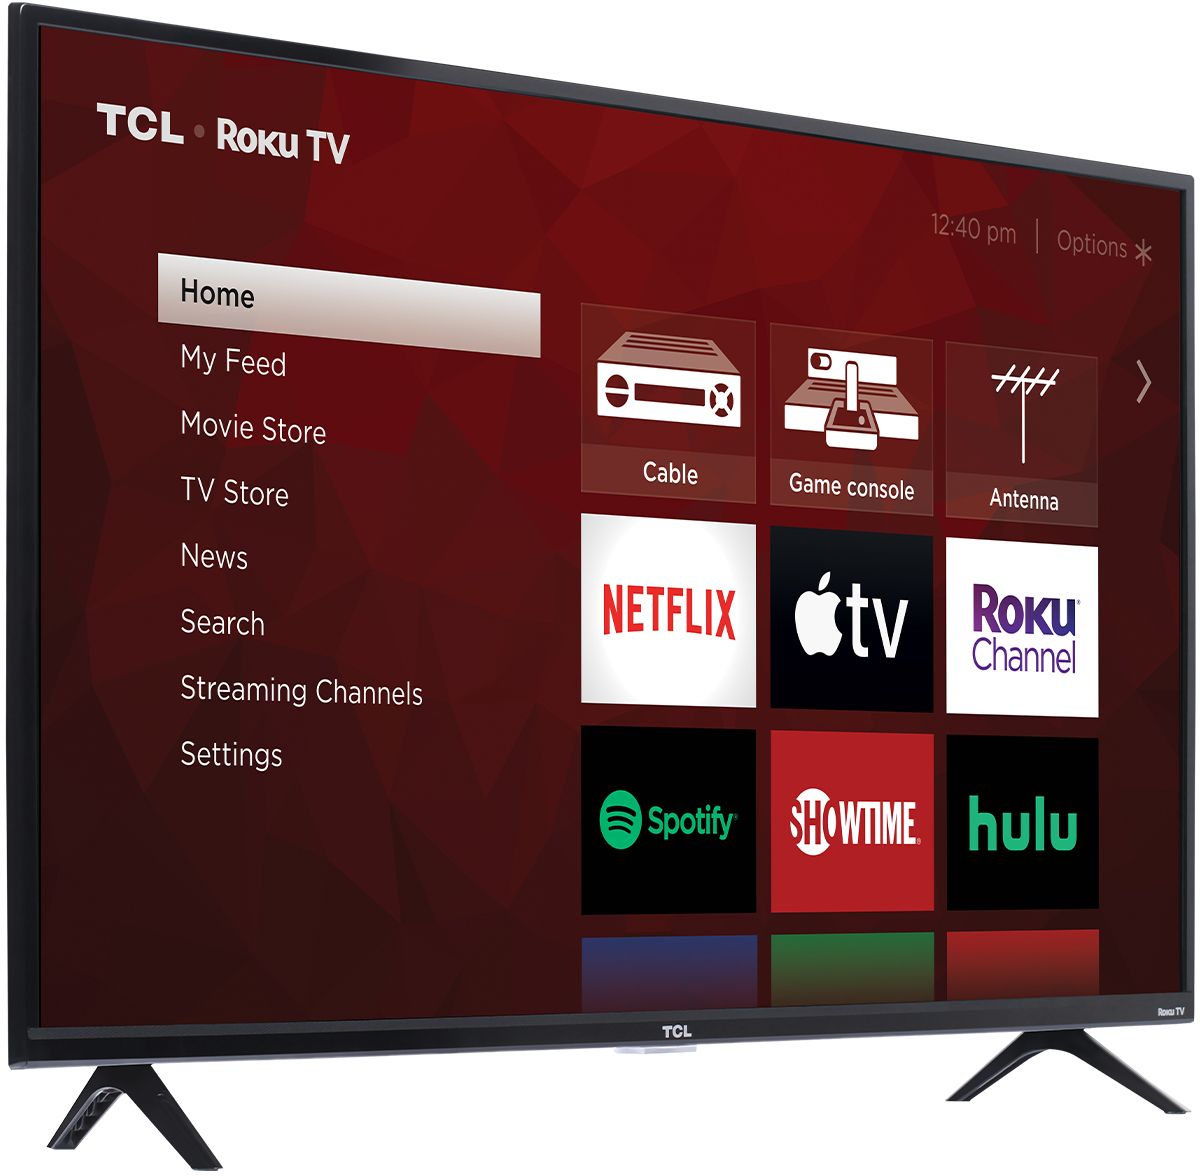 TCL 43 4K Roku Smart TV Just $199.88 at Sam's Club + More